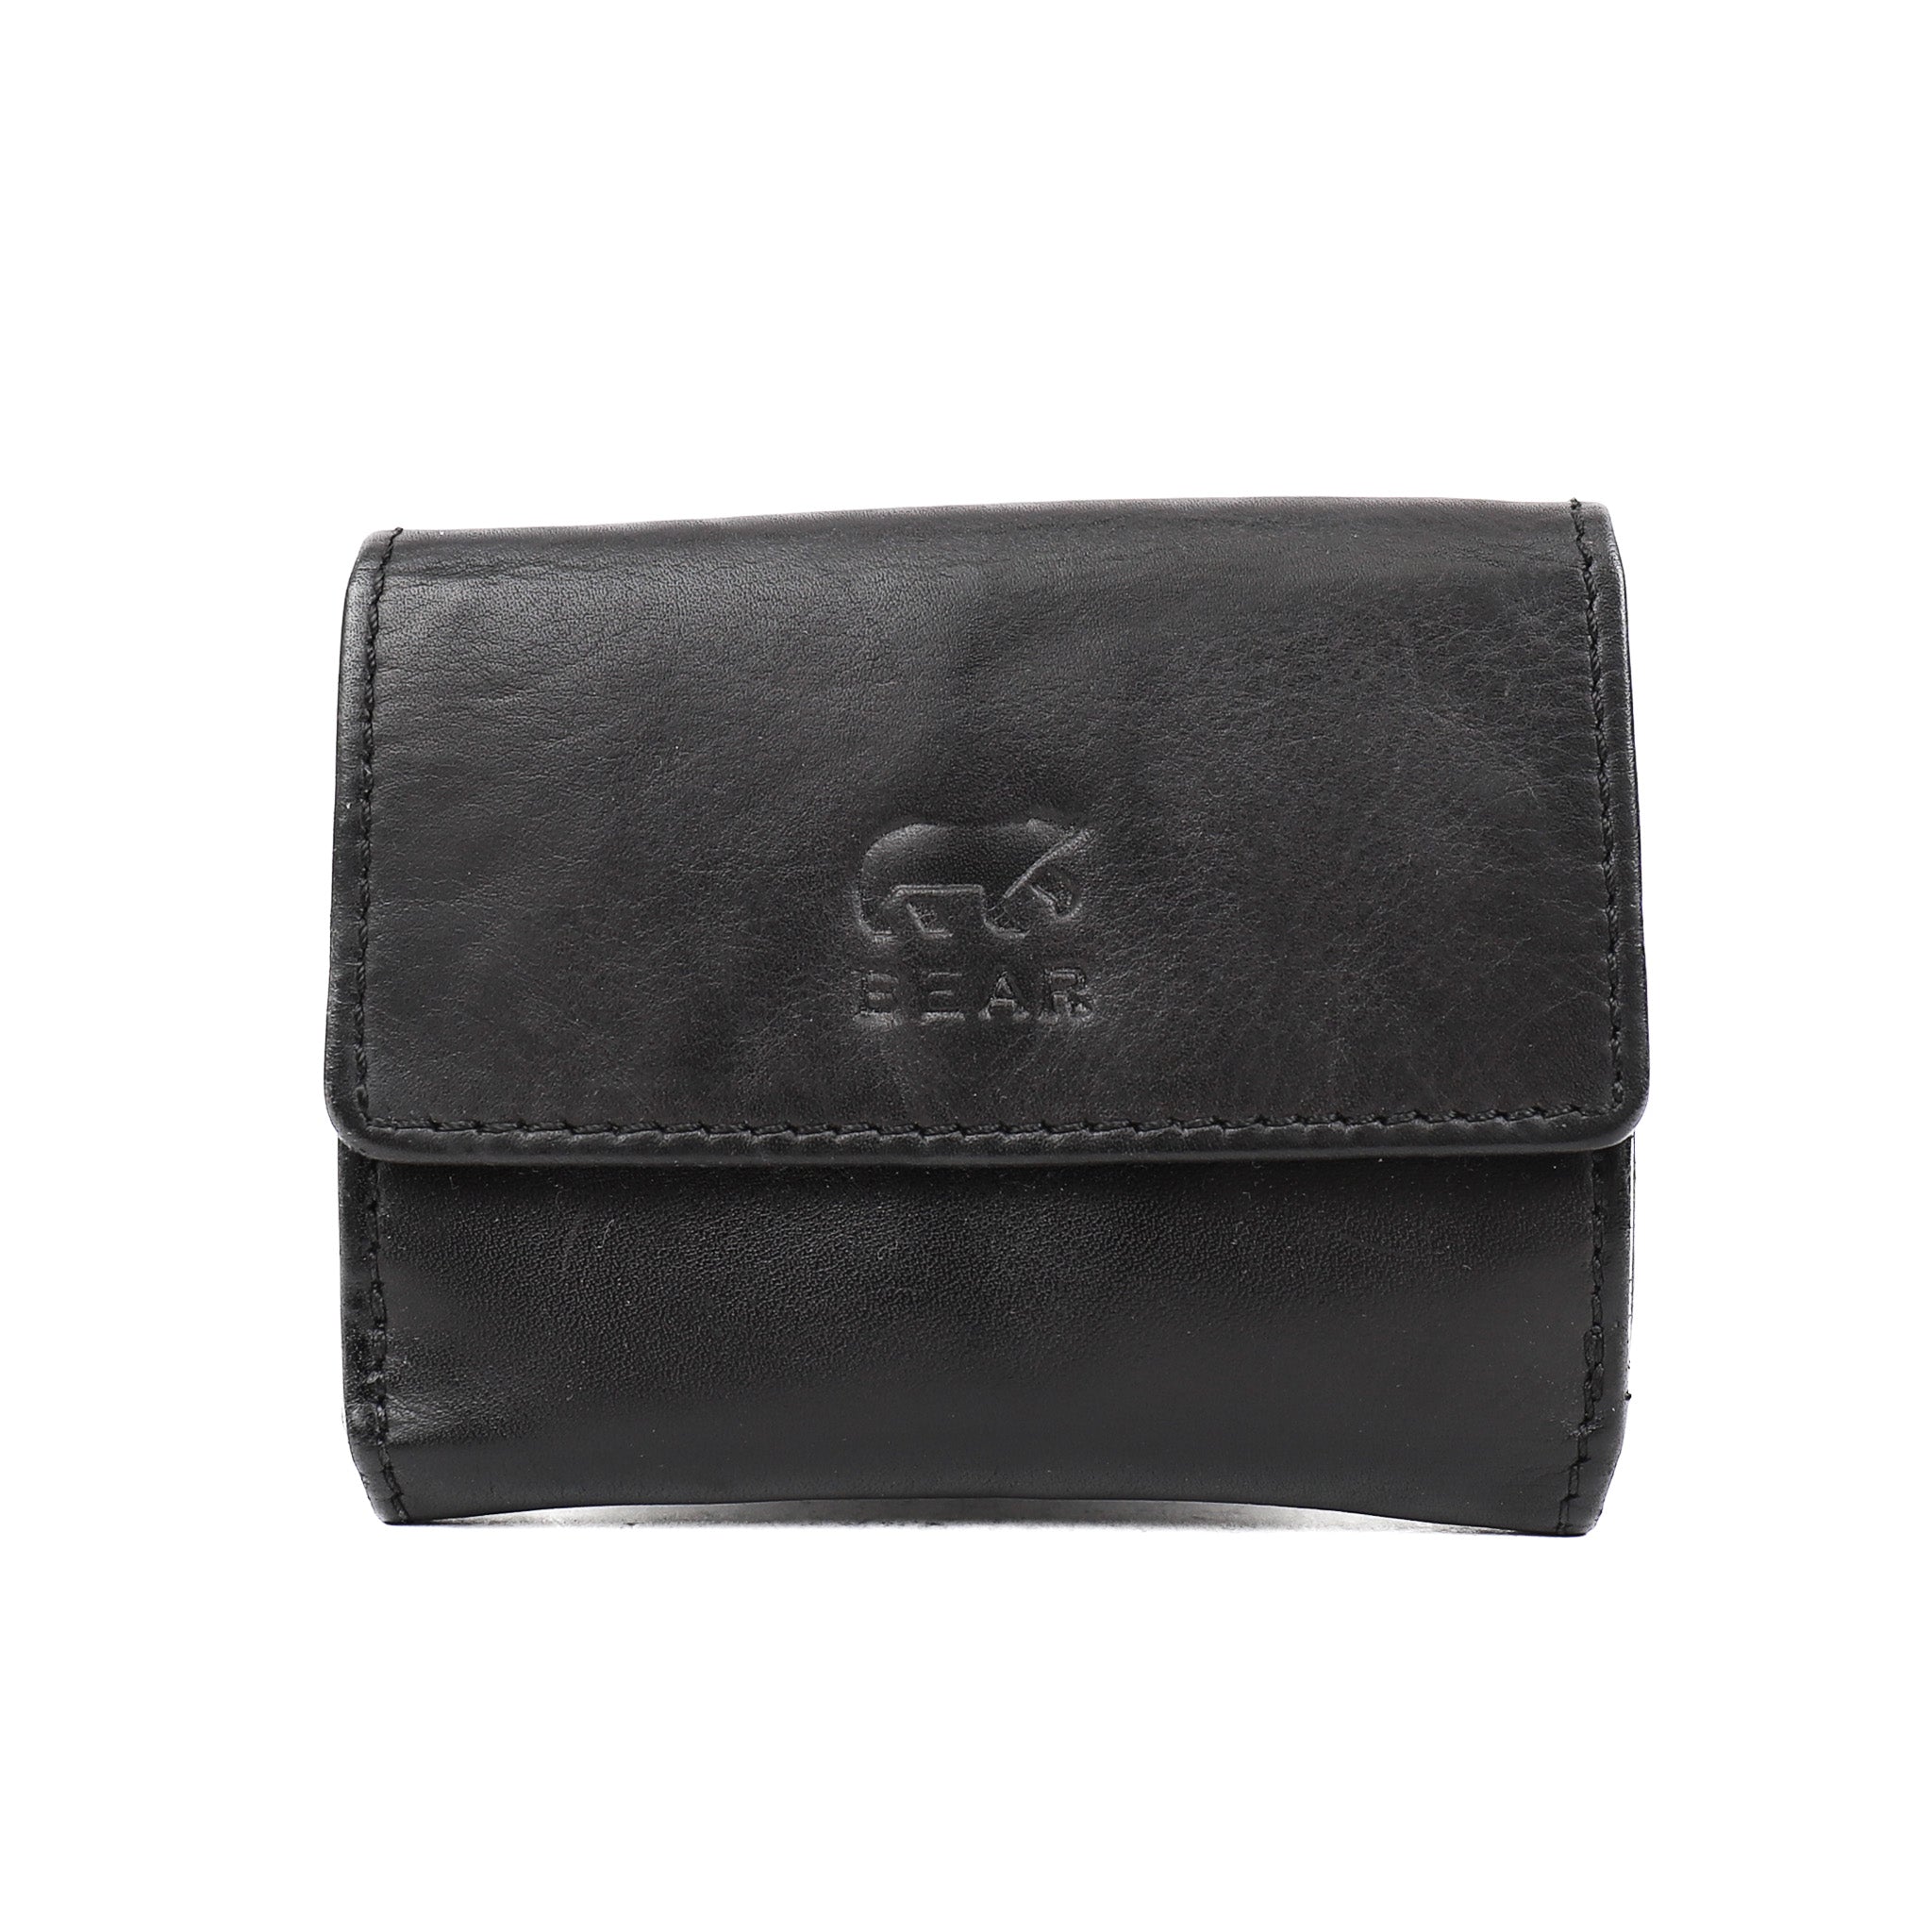 Wallet 'Jolie' black - CL 14618